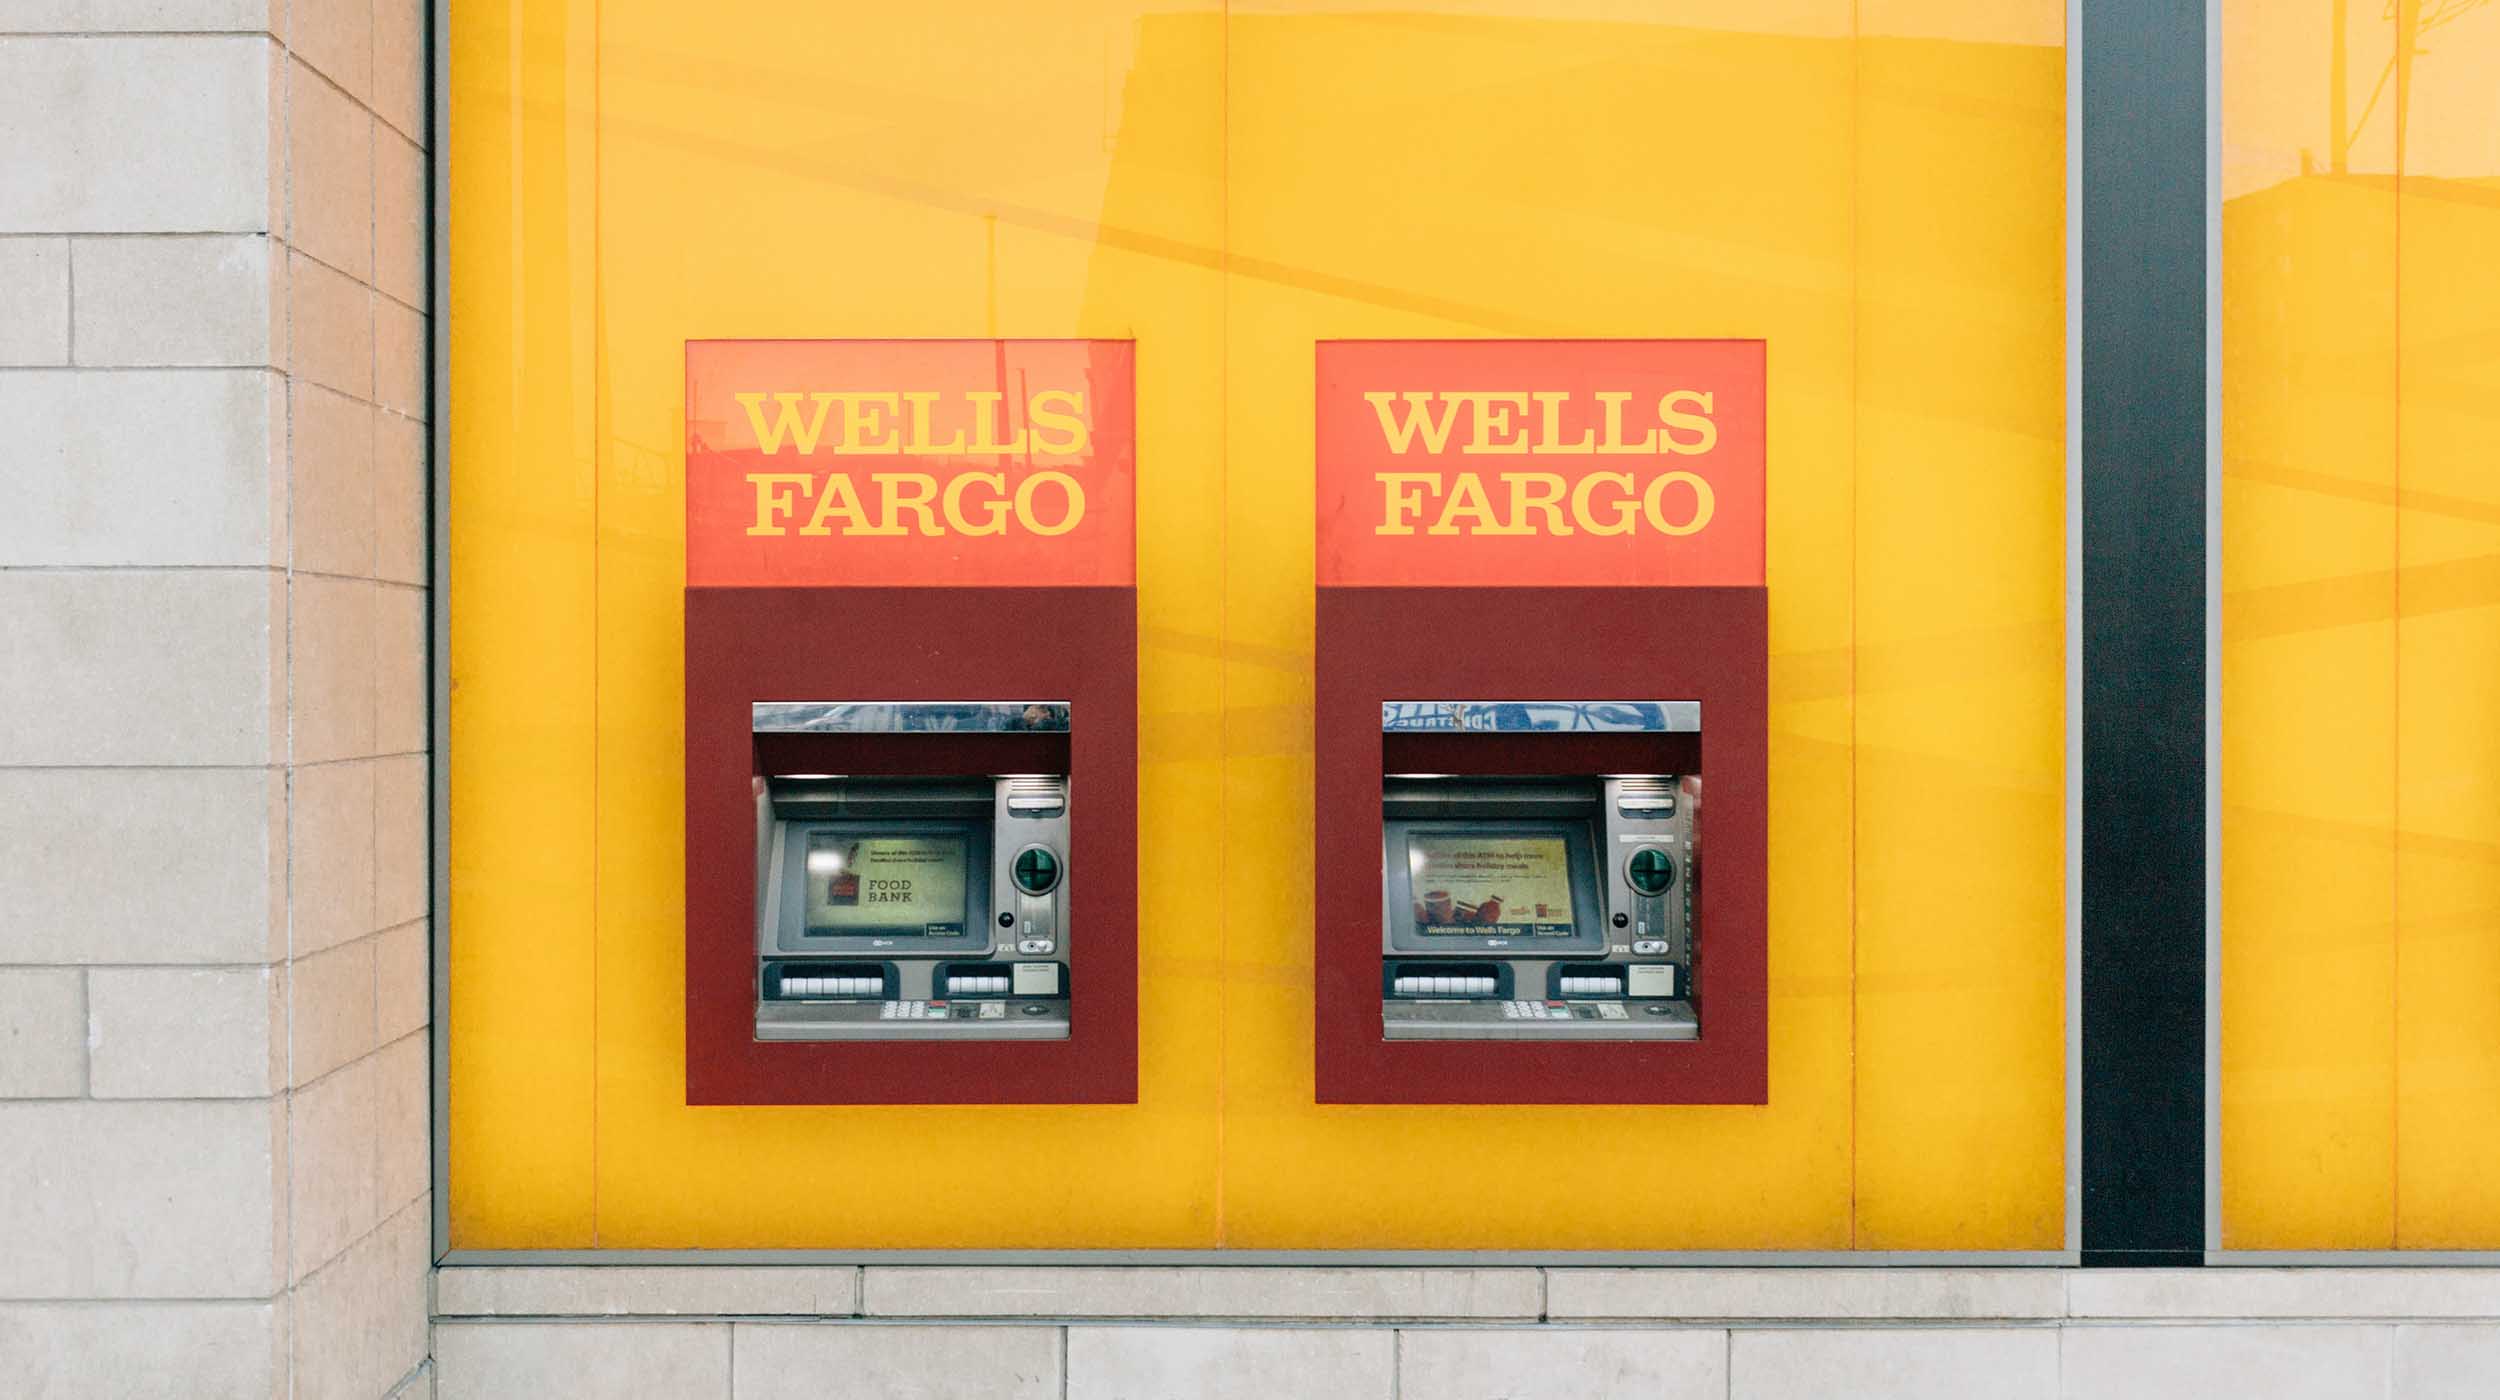 Wells Fargo: The Art of Commitment